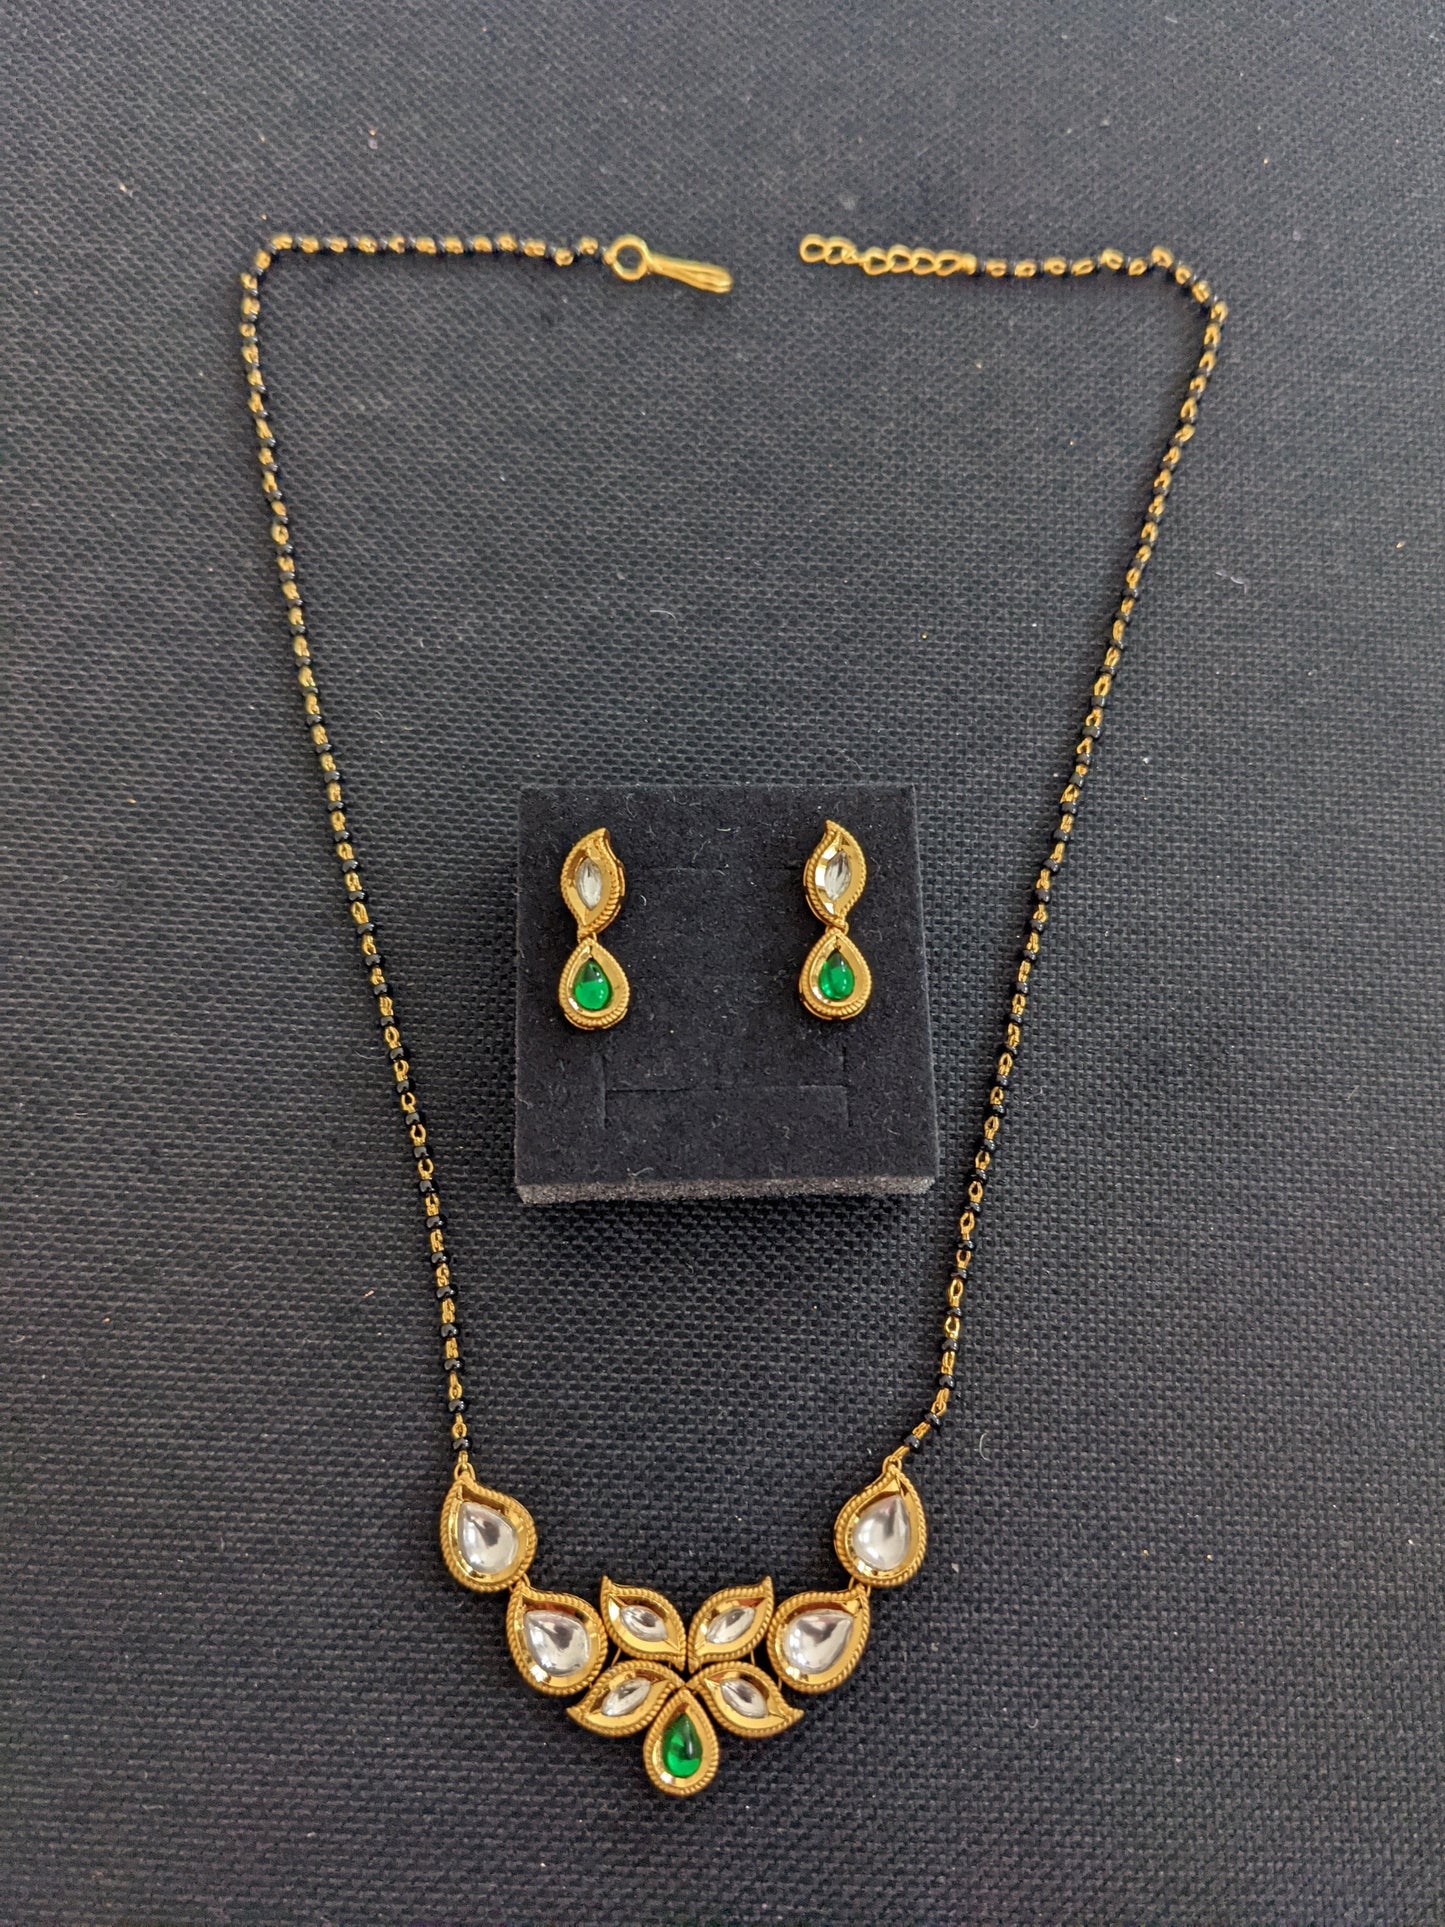 Mangalsutra - Kundan Pendant and Earrings set - Single strand chain - Design 3